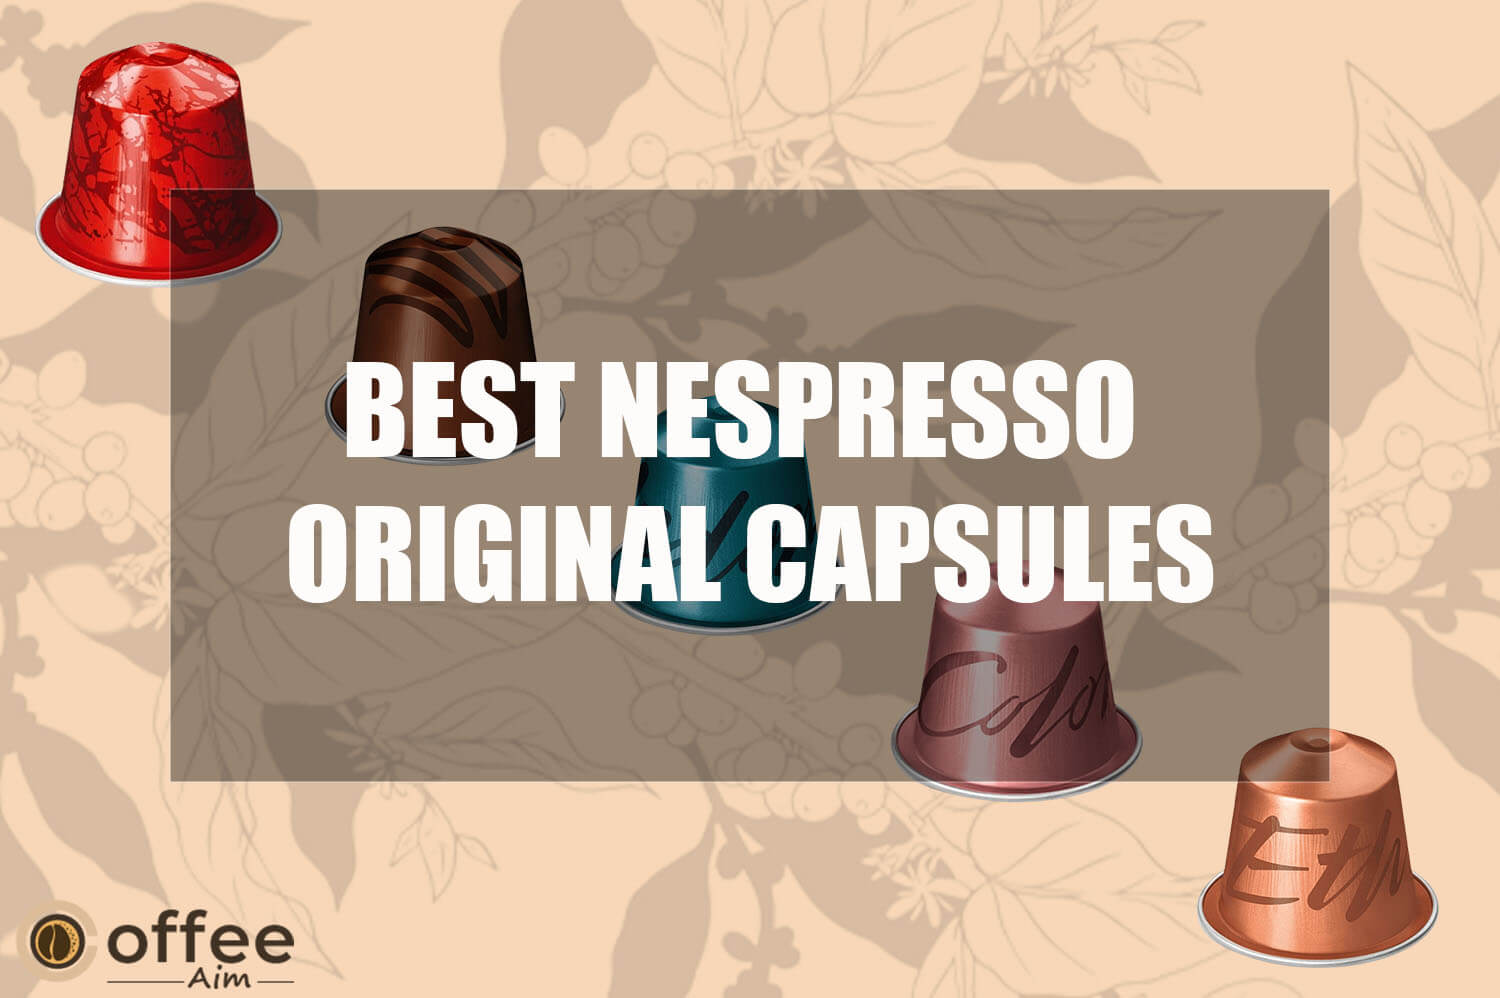 Feature image for the article "Best Nespresso Original Capsules"